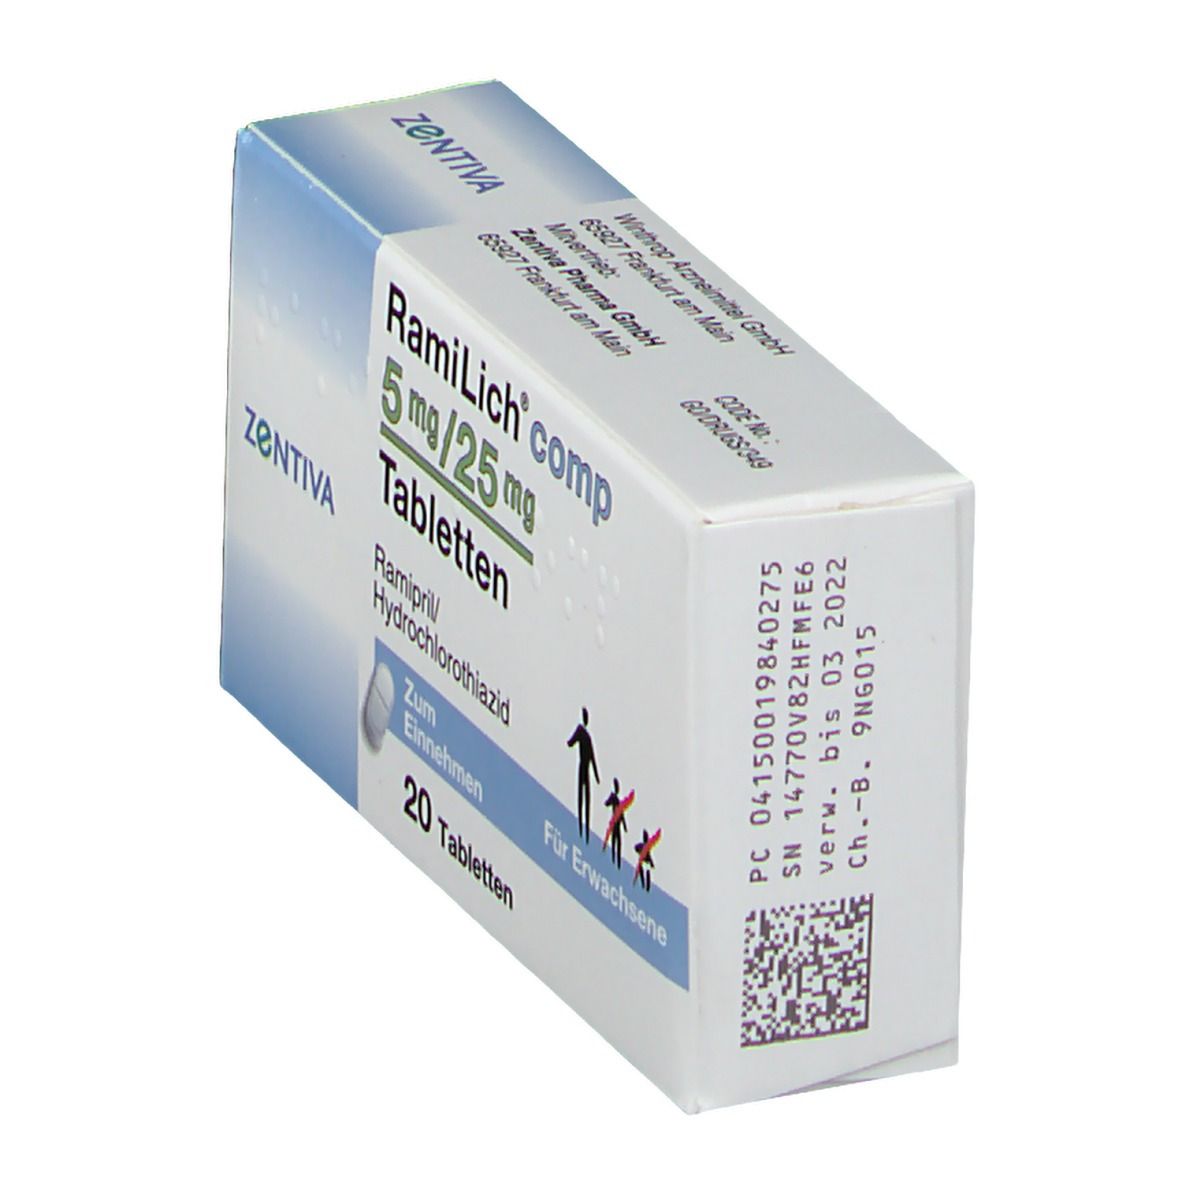 RamiLich® comp 5 mg/25 mg